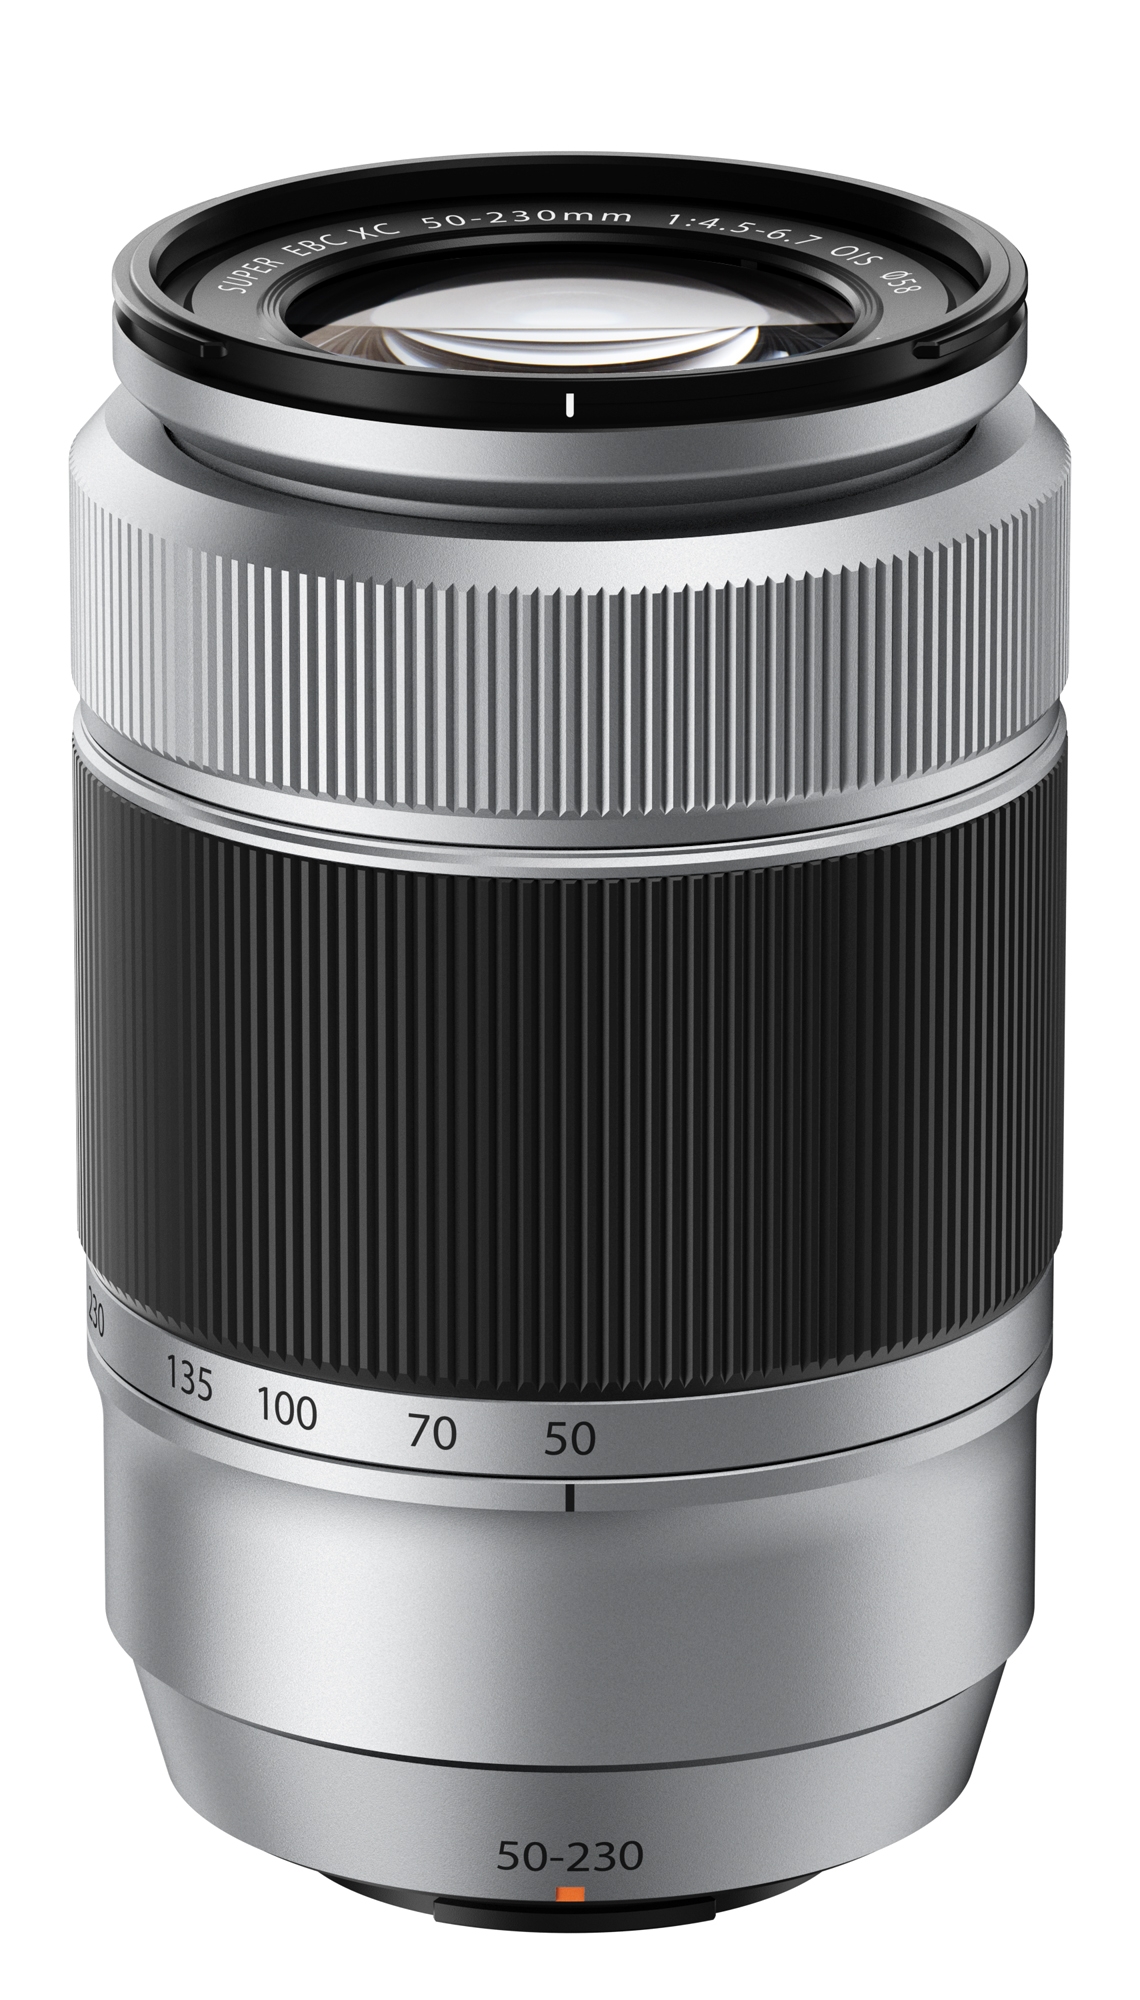 FUJIFILM Announces the X-A1 Digital Camera with 16.3 MP APS-C CMOS